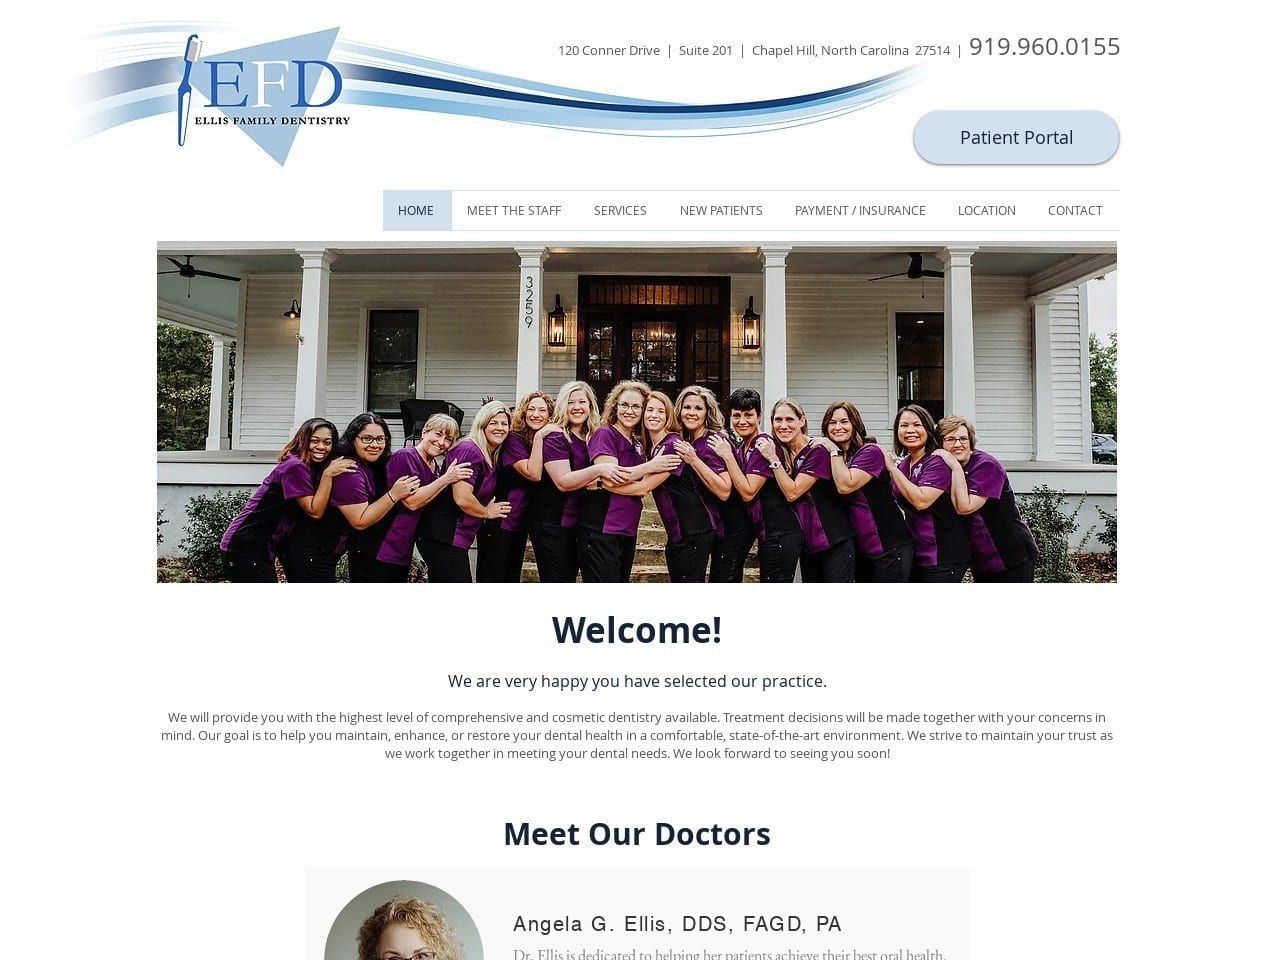 Ellis Family Dentist Website Screenshot from ellisdentistry.com